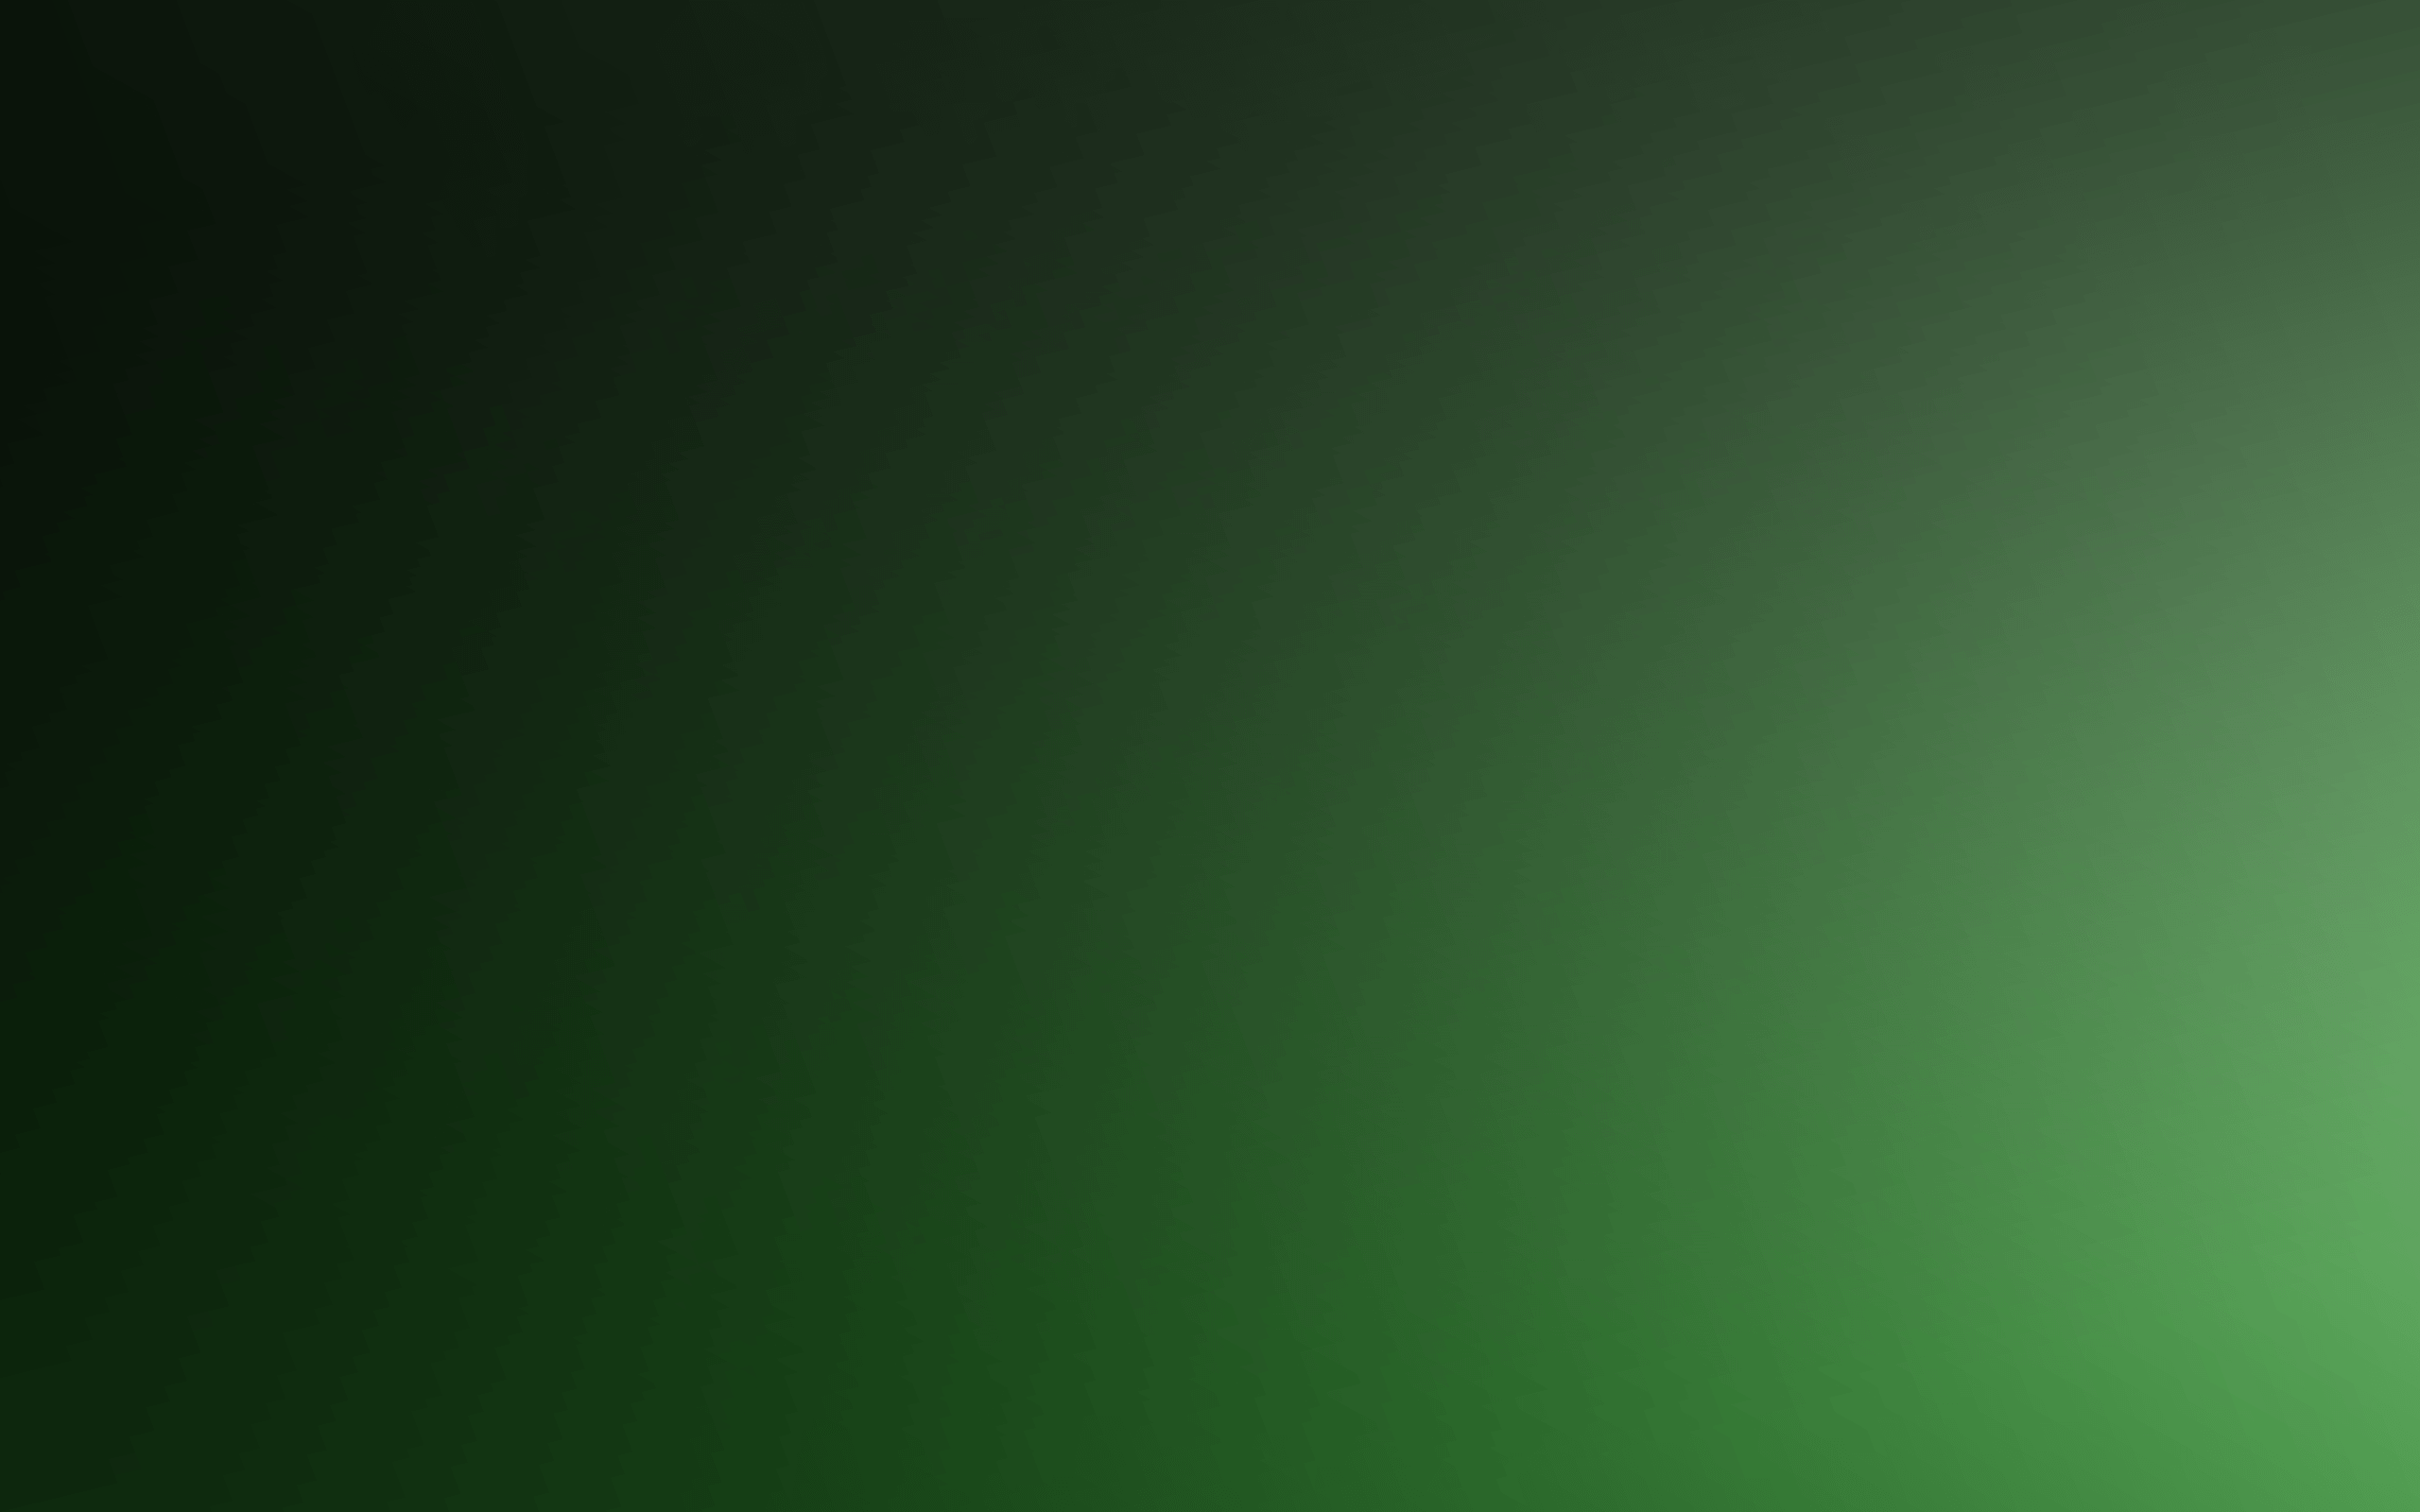 Dark Green Wallpaper HD Image Desktop Minimal Px For Mobile Phones